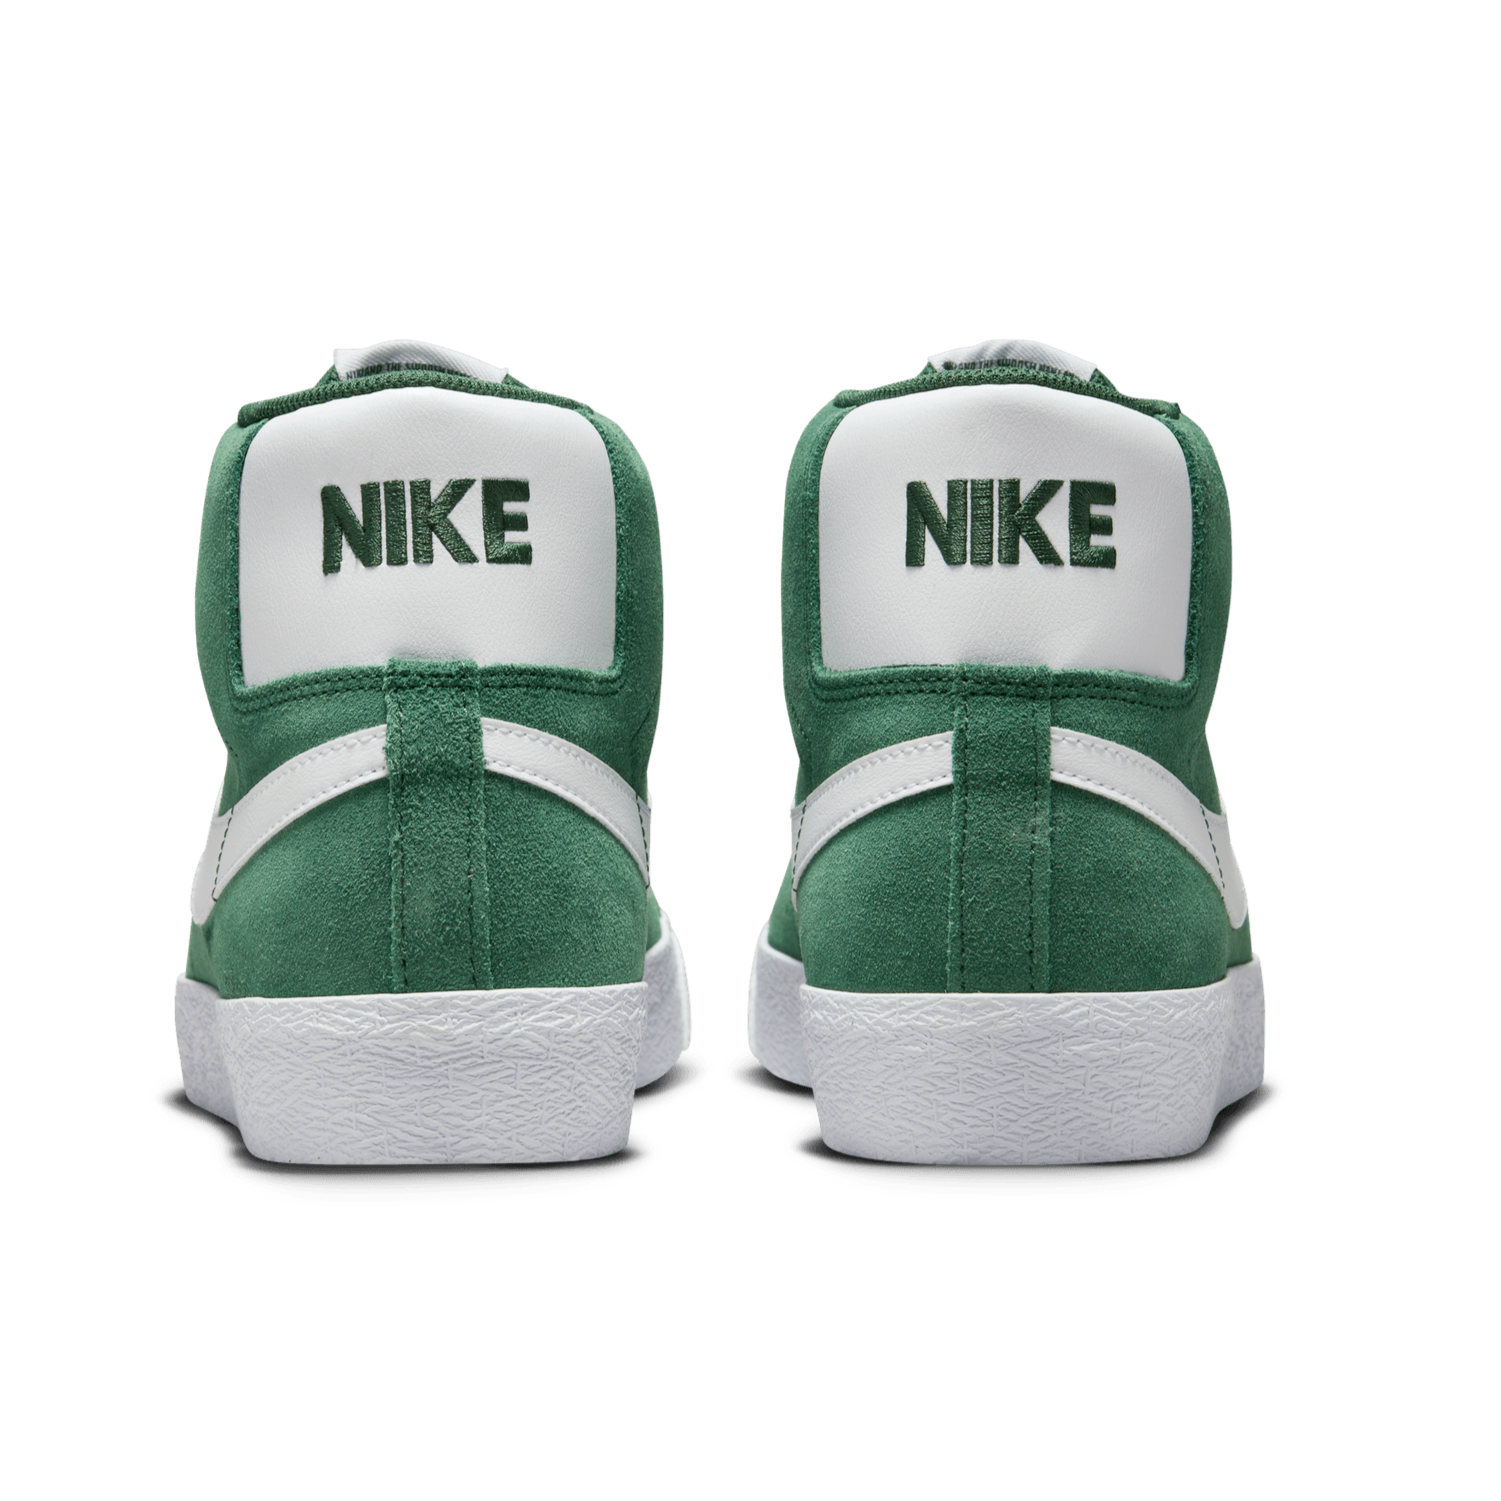 Fir/White Nike SB Blazer Mid Skateboard Shoe Back